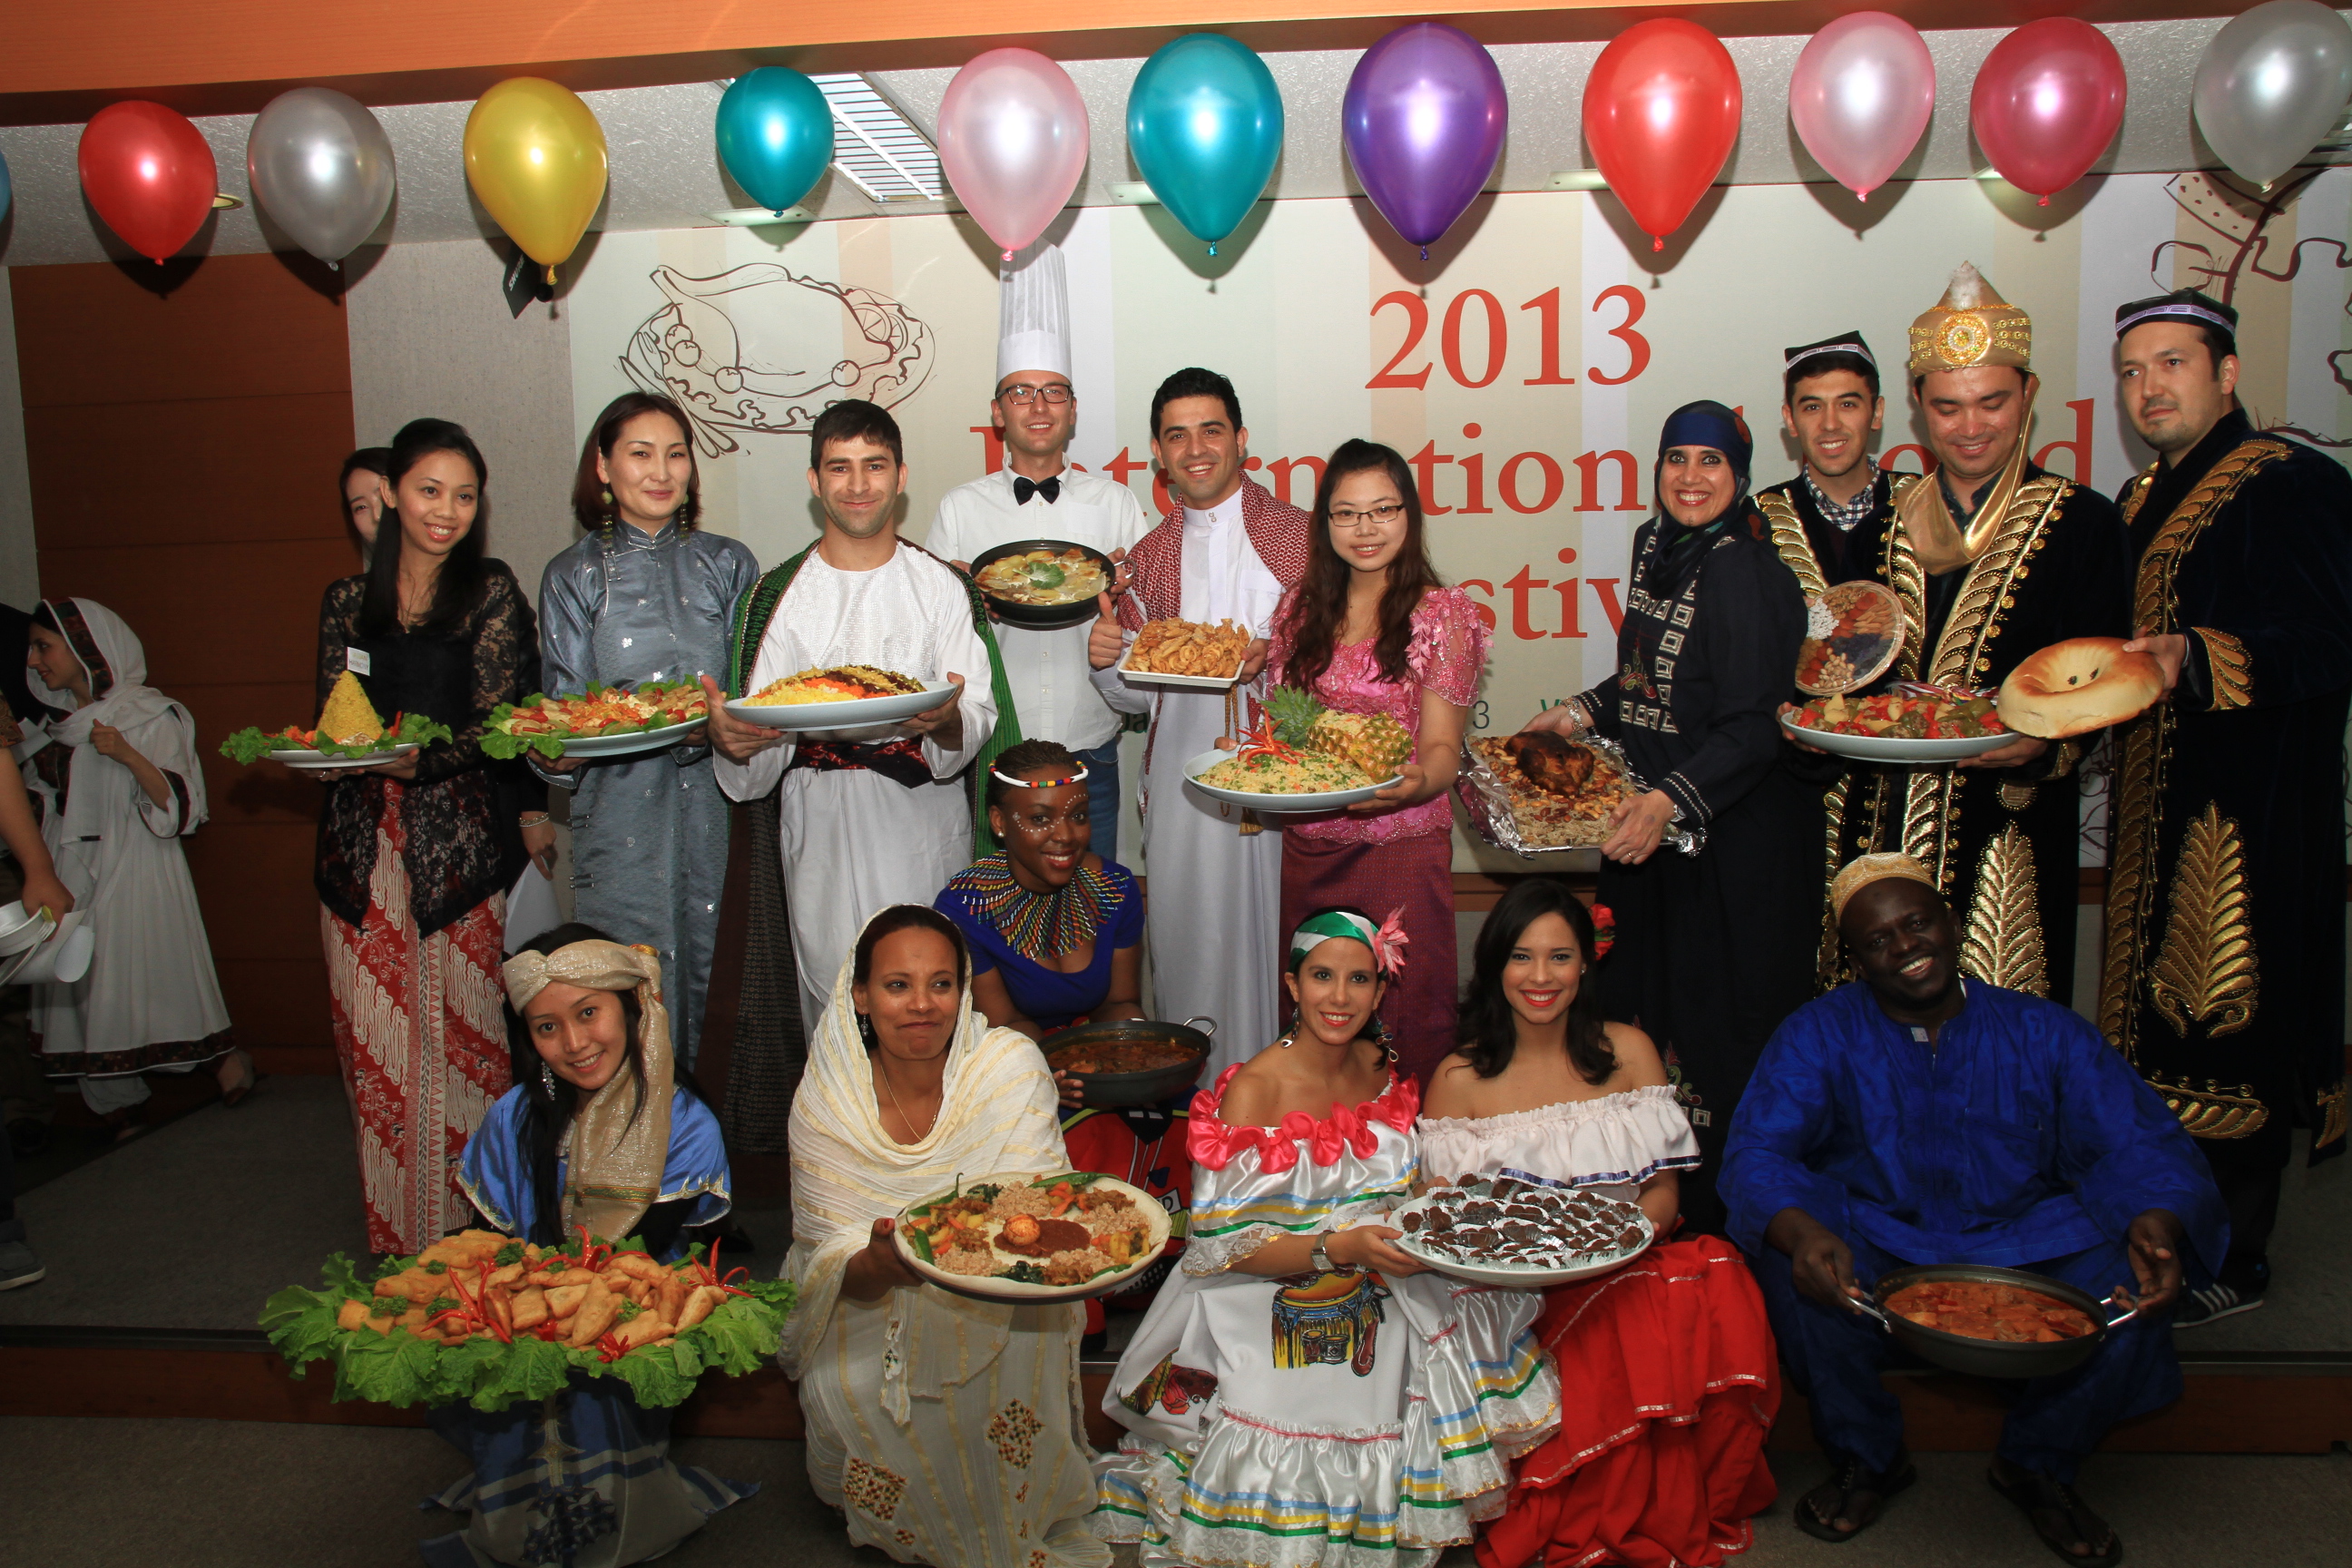 Food Festival showcases student diversity & culinary skills